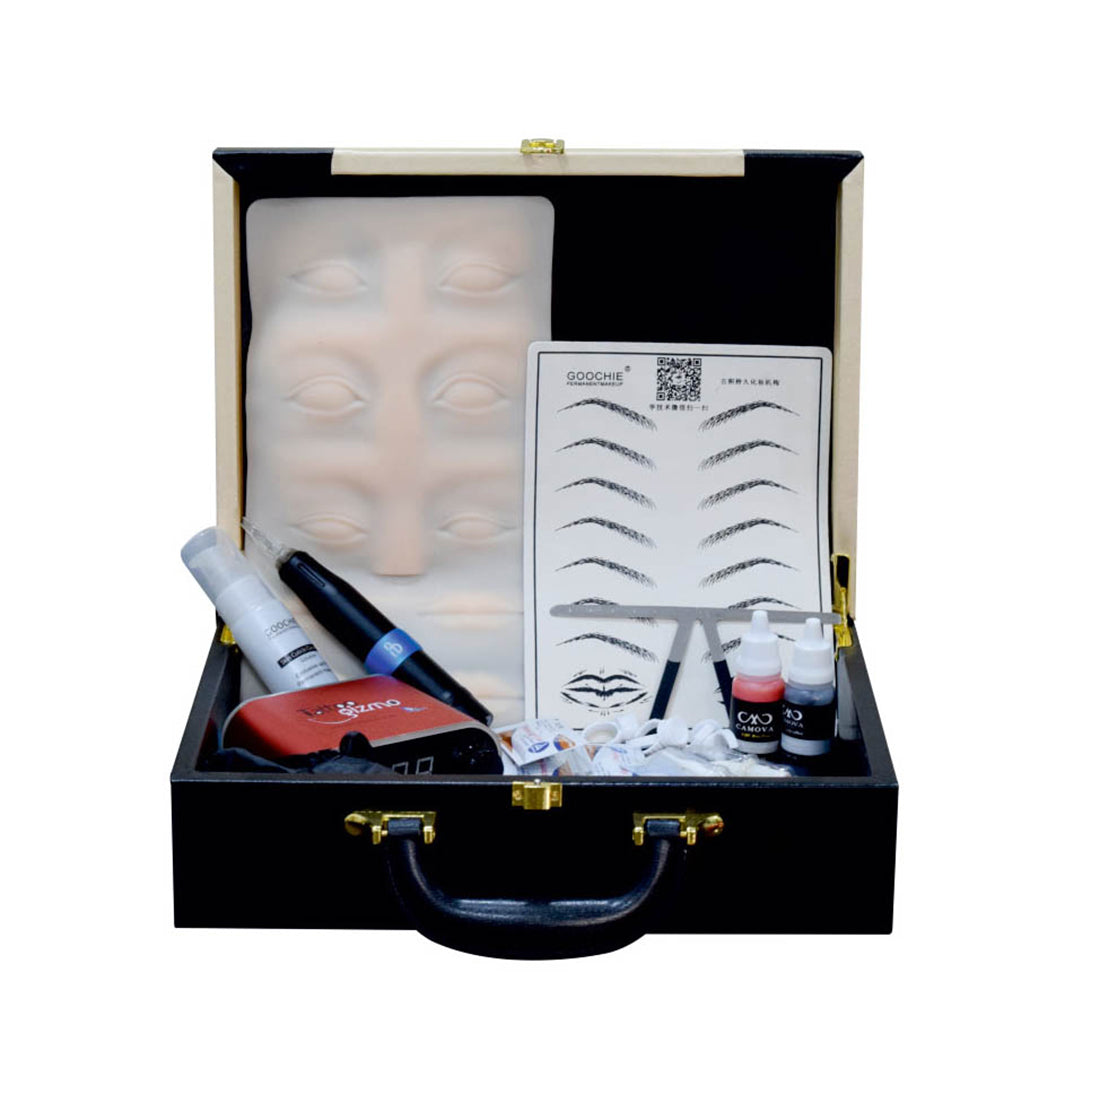 PMU Wireless Makeup Kit